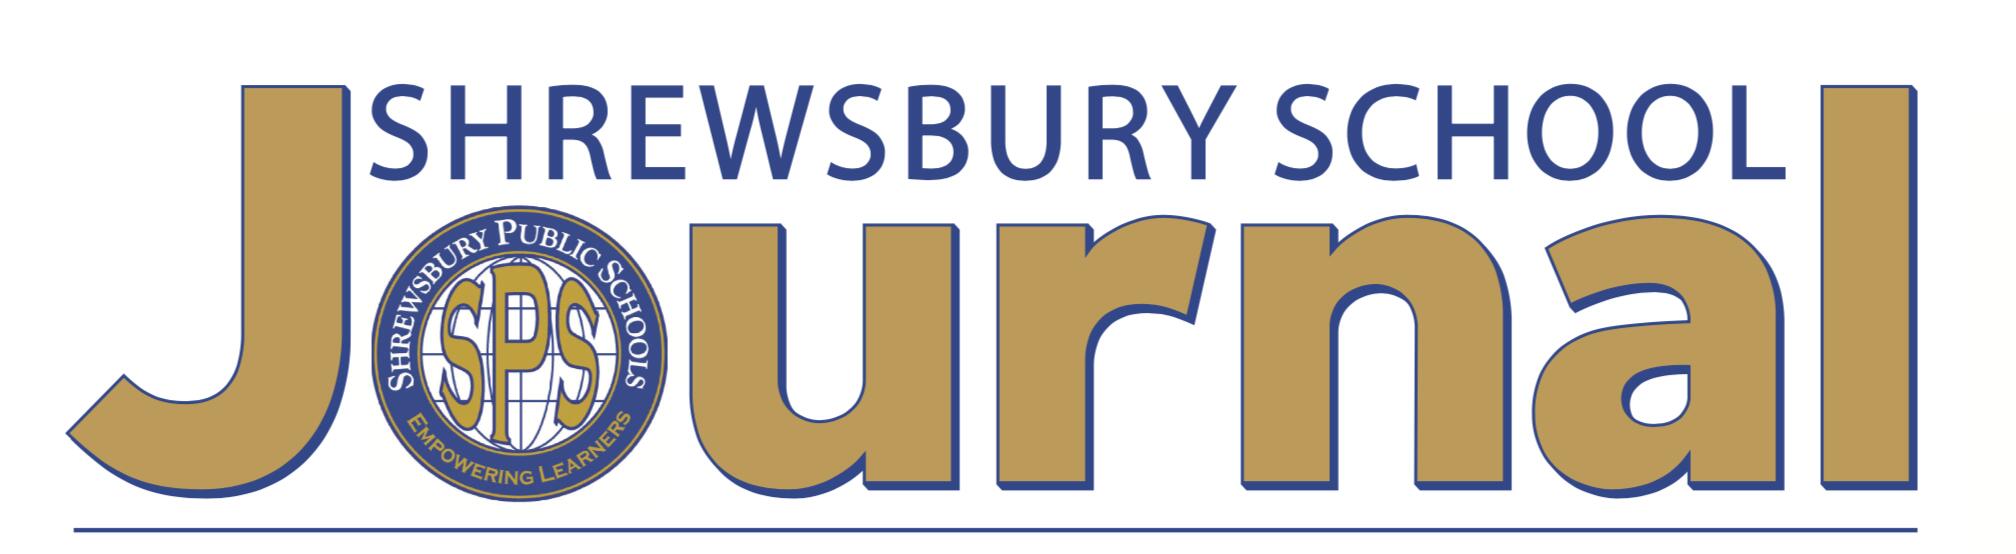 Shrewsbury School Journal logo